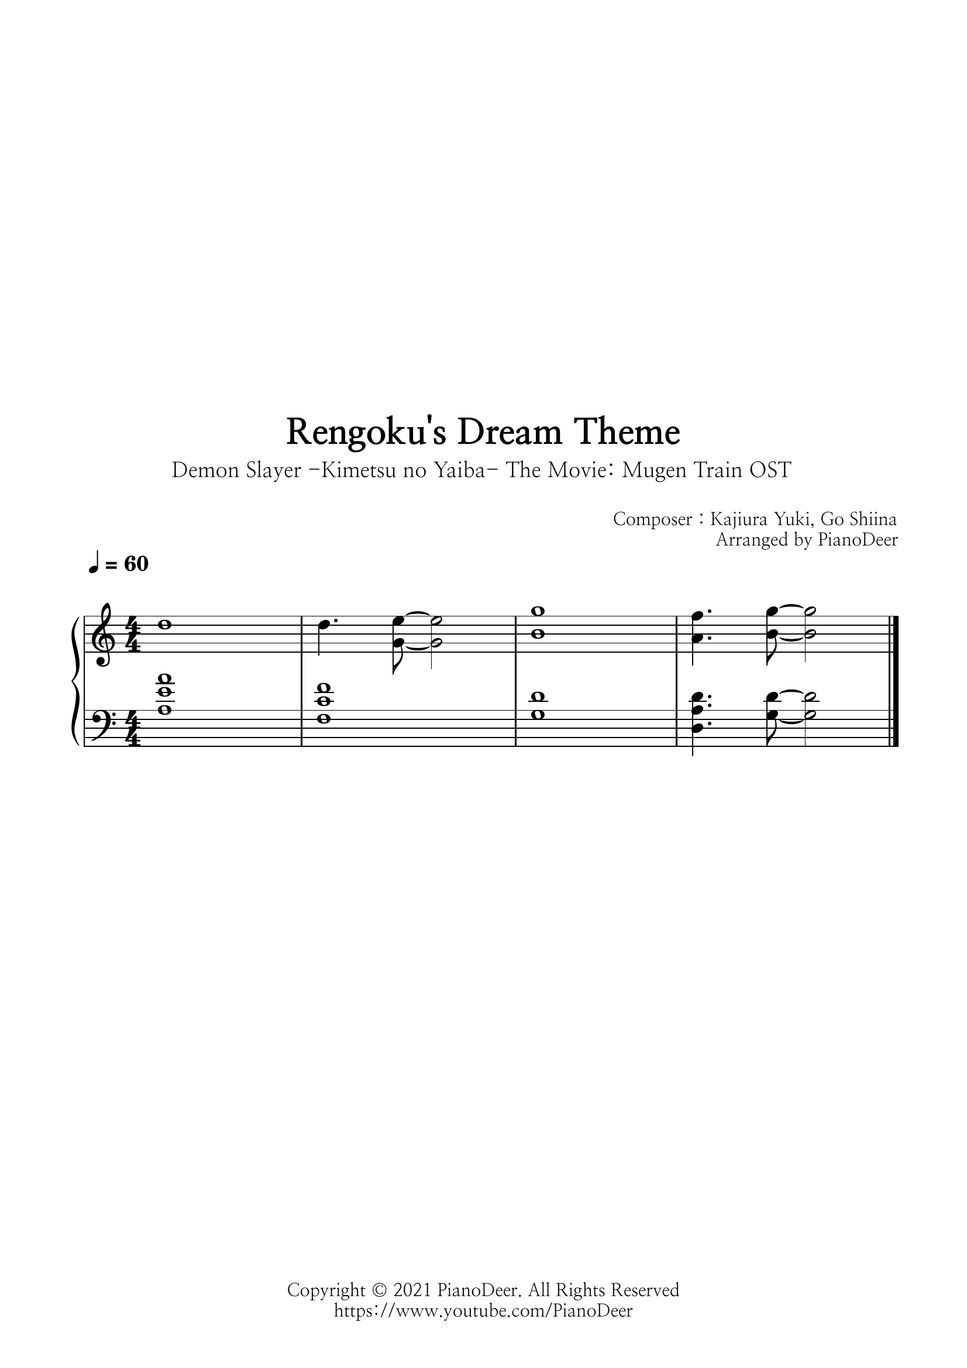 Demon Slayer: Kimetsu No Yaiba OST - Rengoku's Dream Theme by PianoDeer